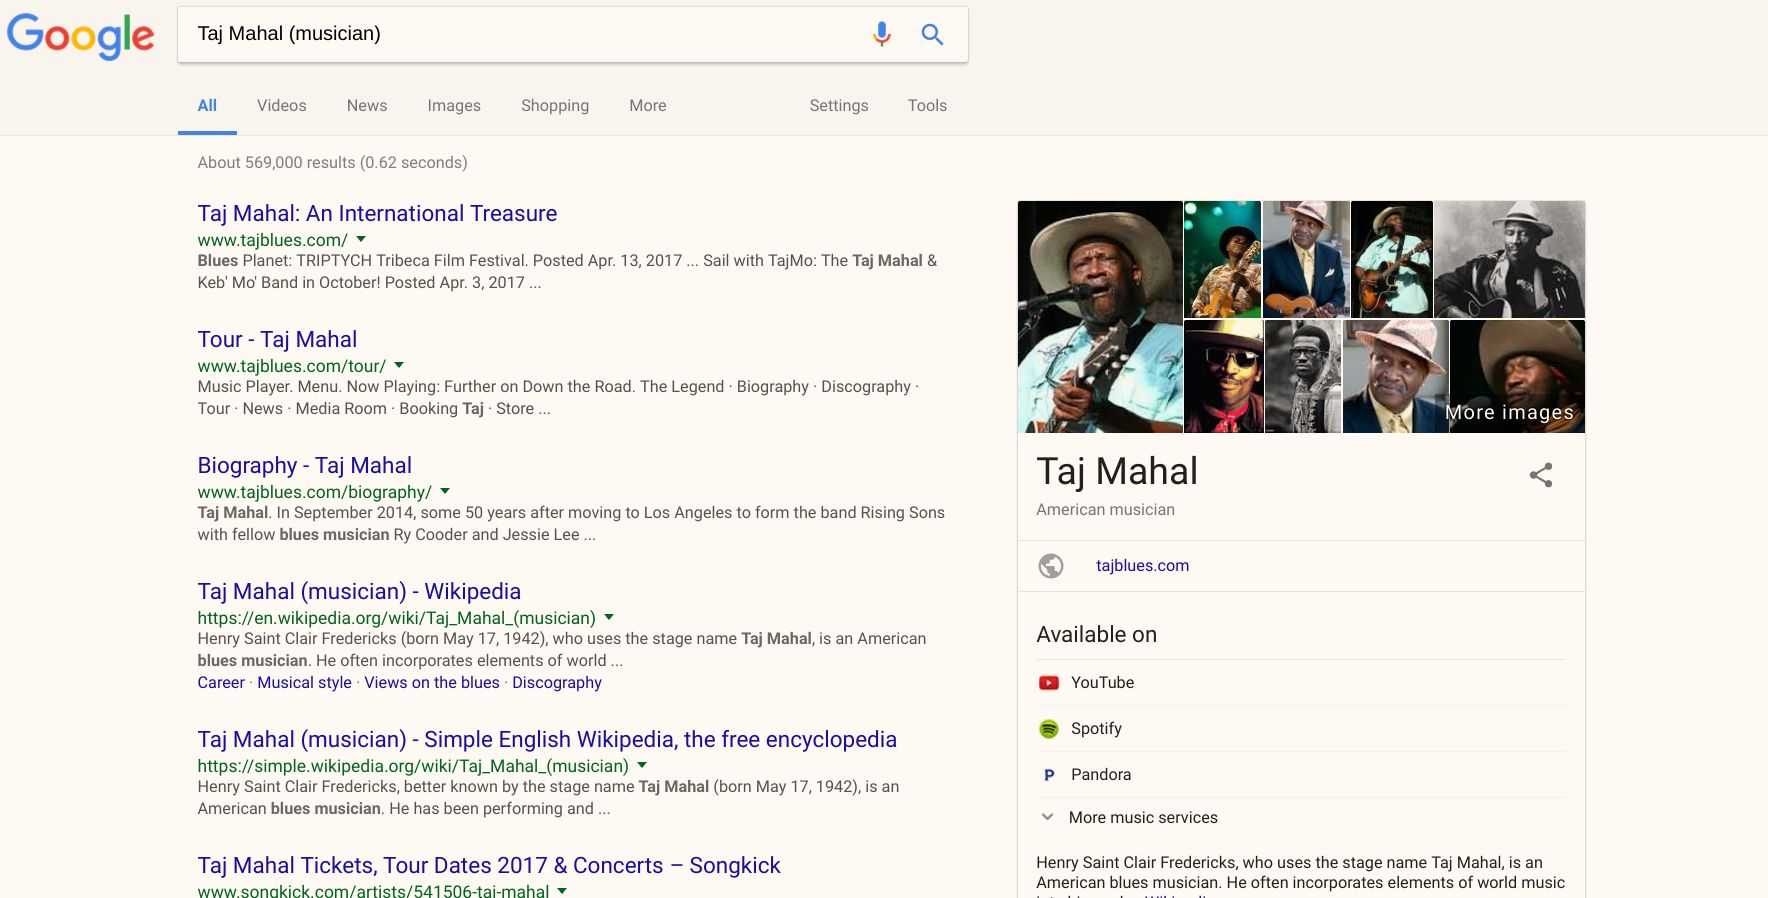 A search for “taj mahal (musician)” on Google.